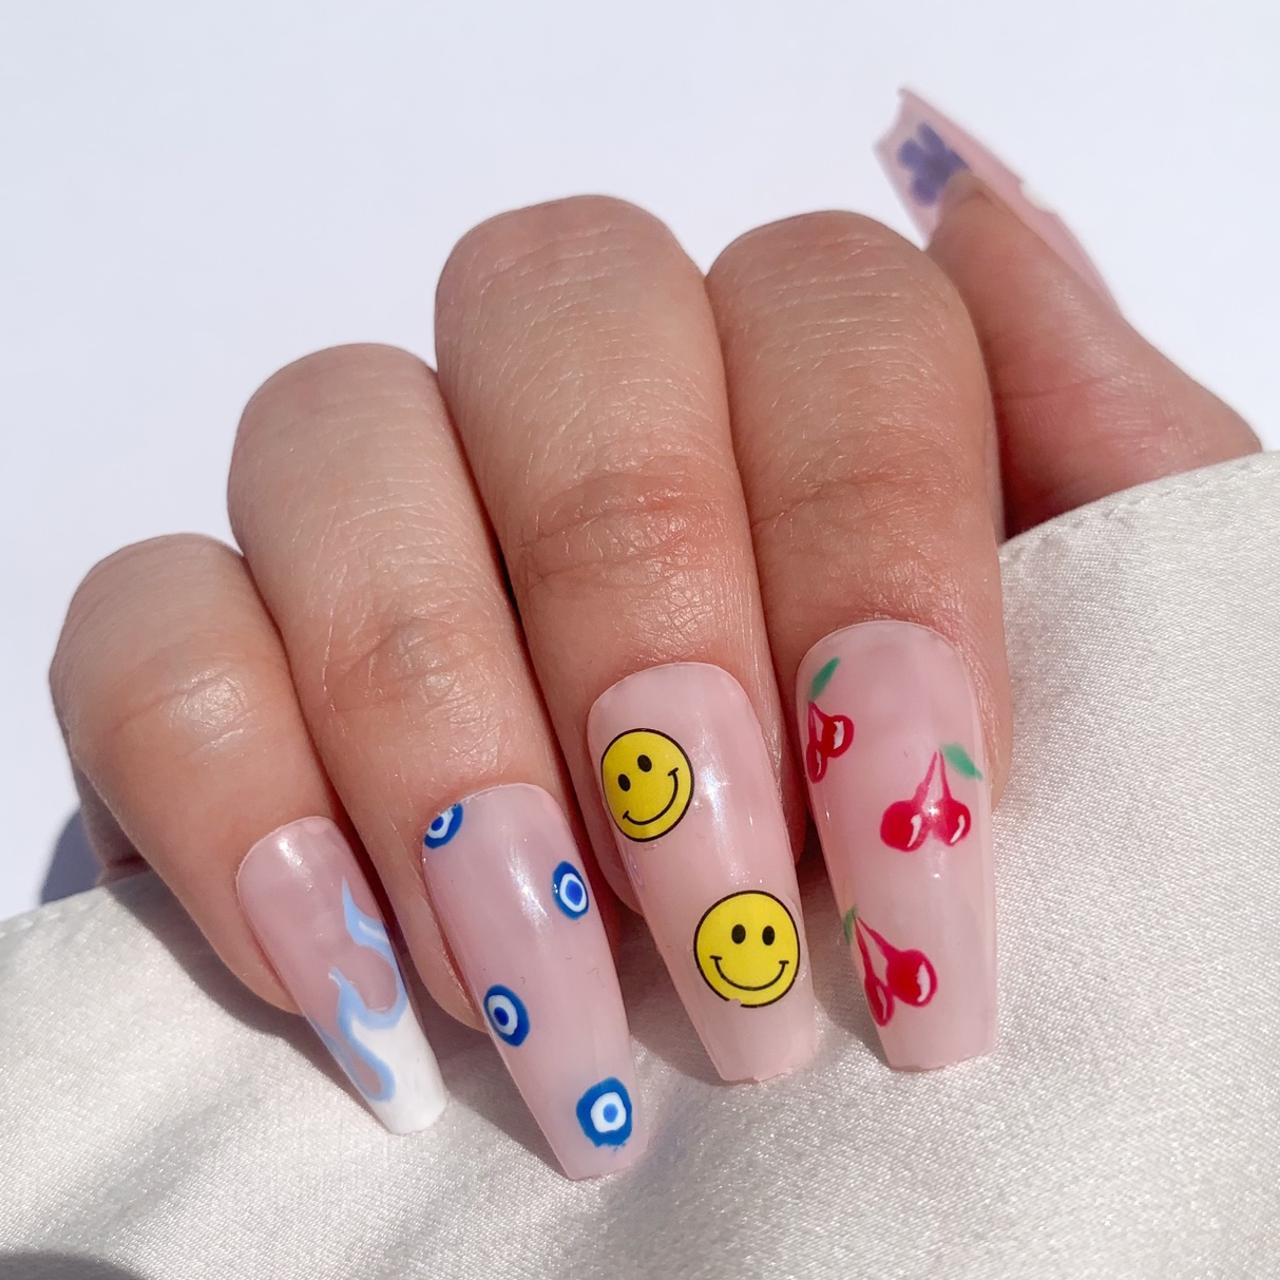 Neon emoji nail art | OrdinaryMisfit